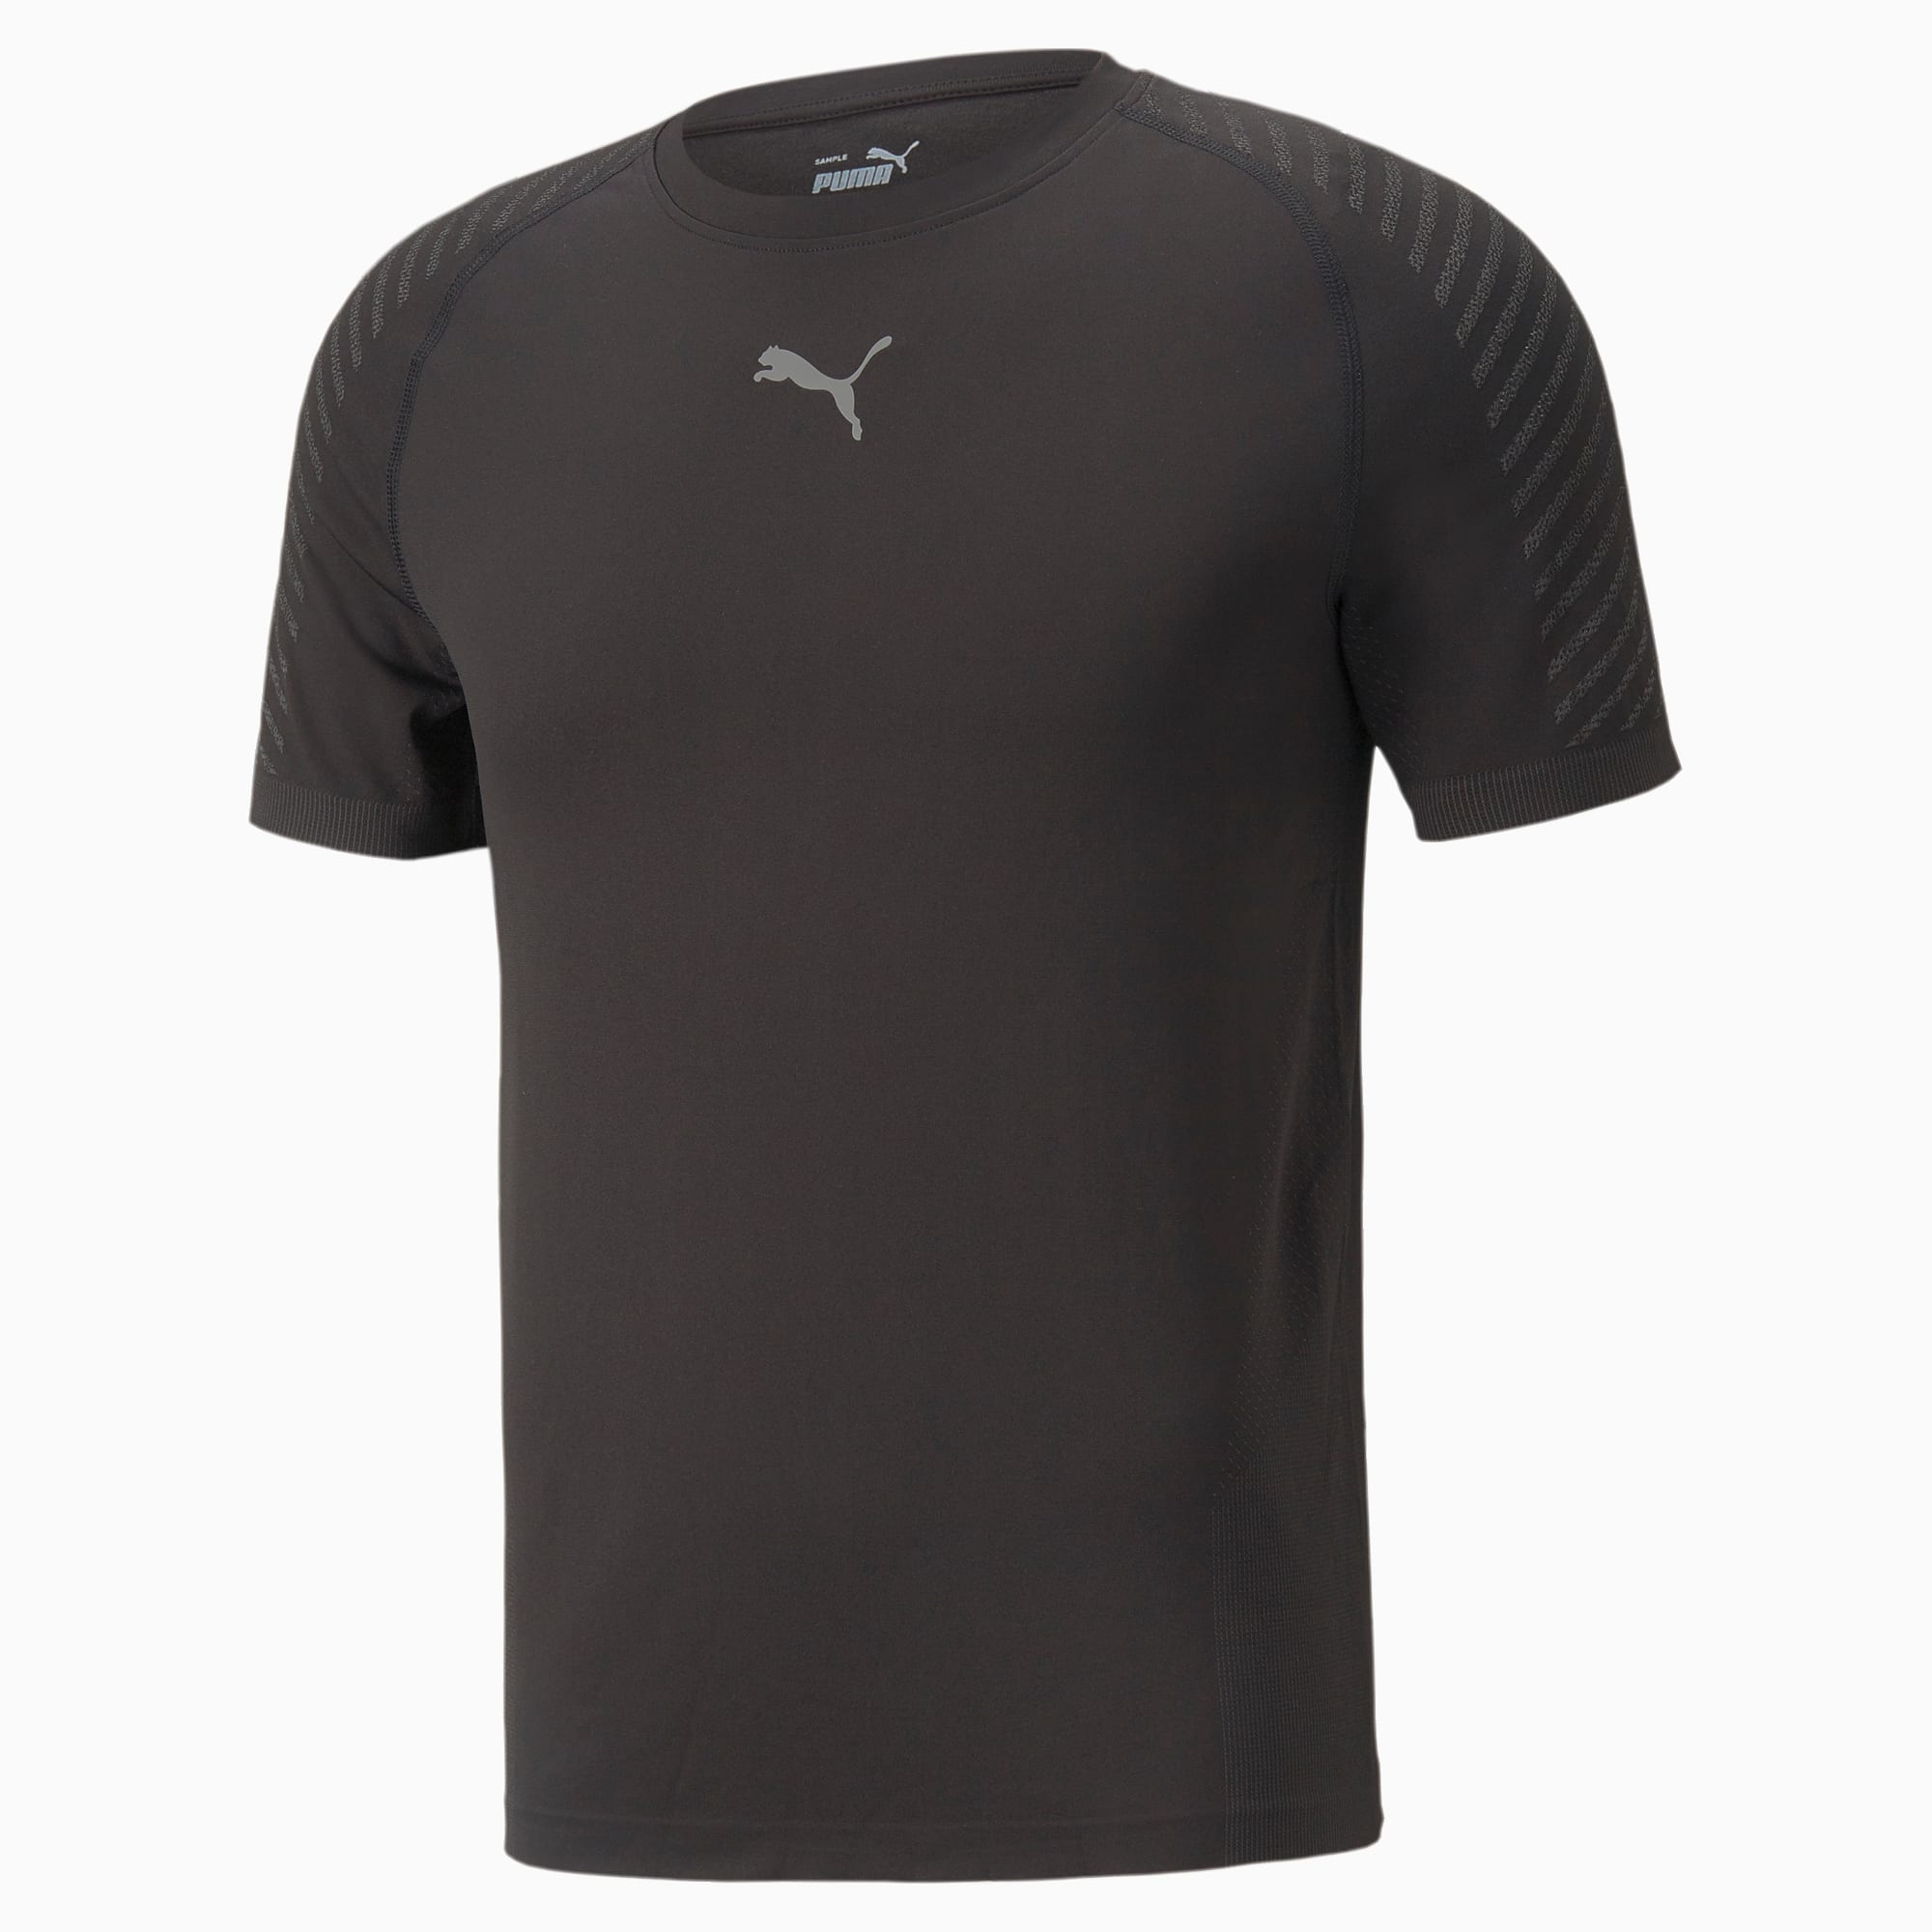 Seamless Fitness Training T-Shirt - Mottled Grey